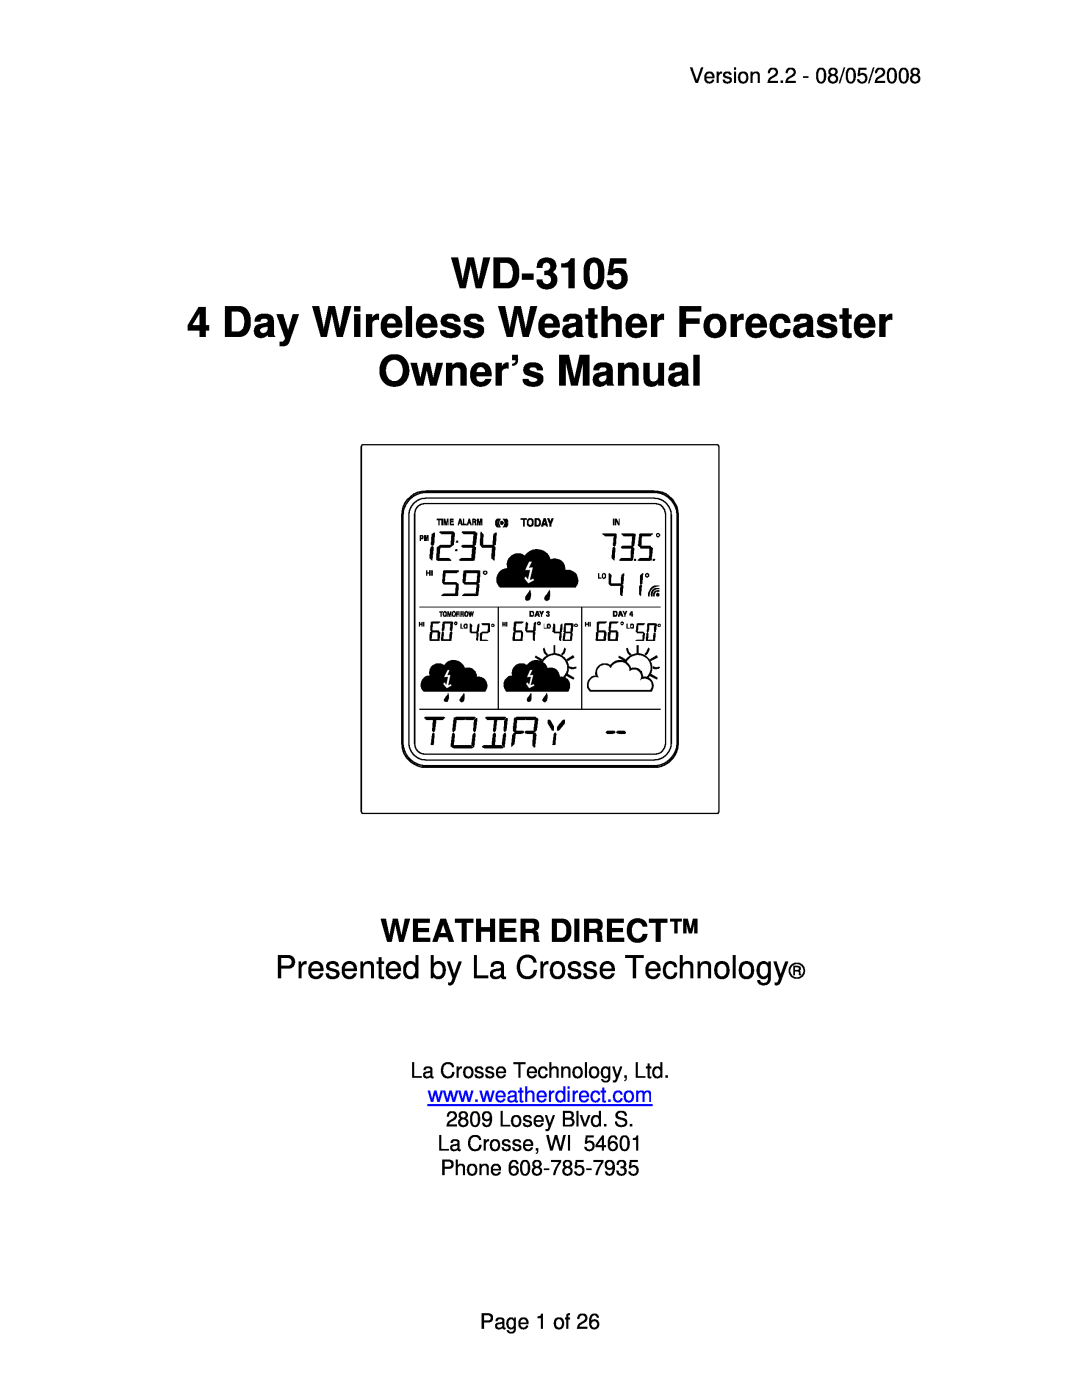 La Crosse Technology WD-3105 owner manual Weather Direct, Presented by La Crosse Technology 